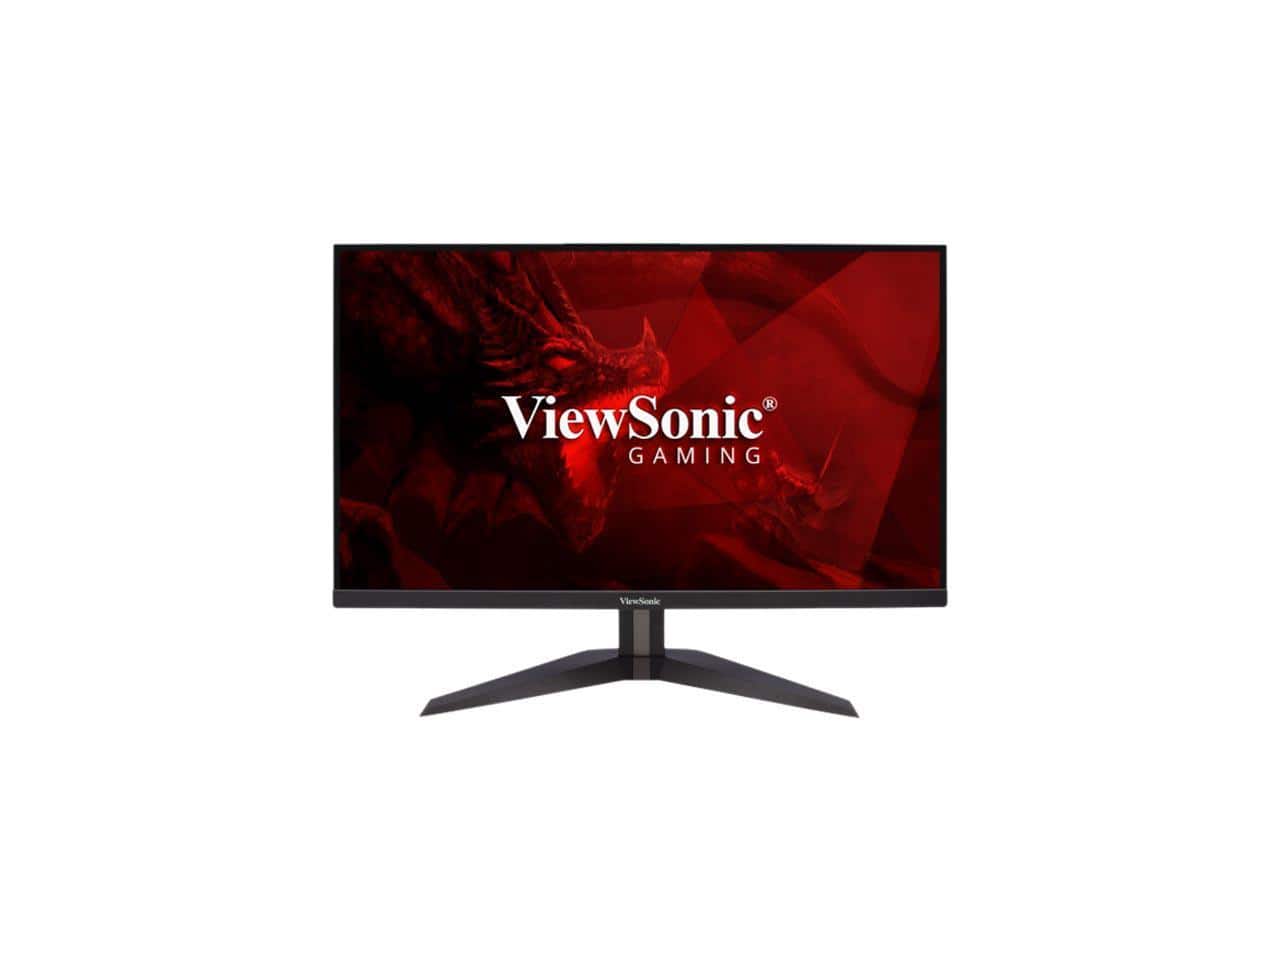 27" ViewSonic VX2758-2KP-MHD 2560x1440 WQHD 144Hz 1ms FreeSync IPS Monitor $249.99